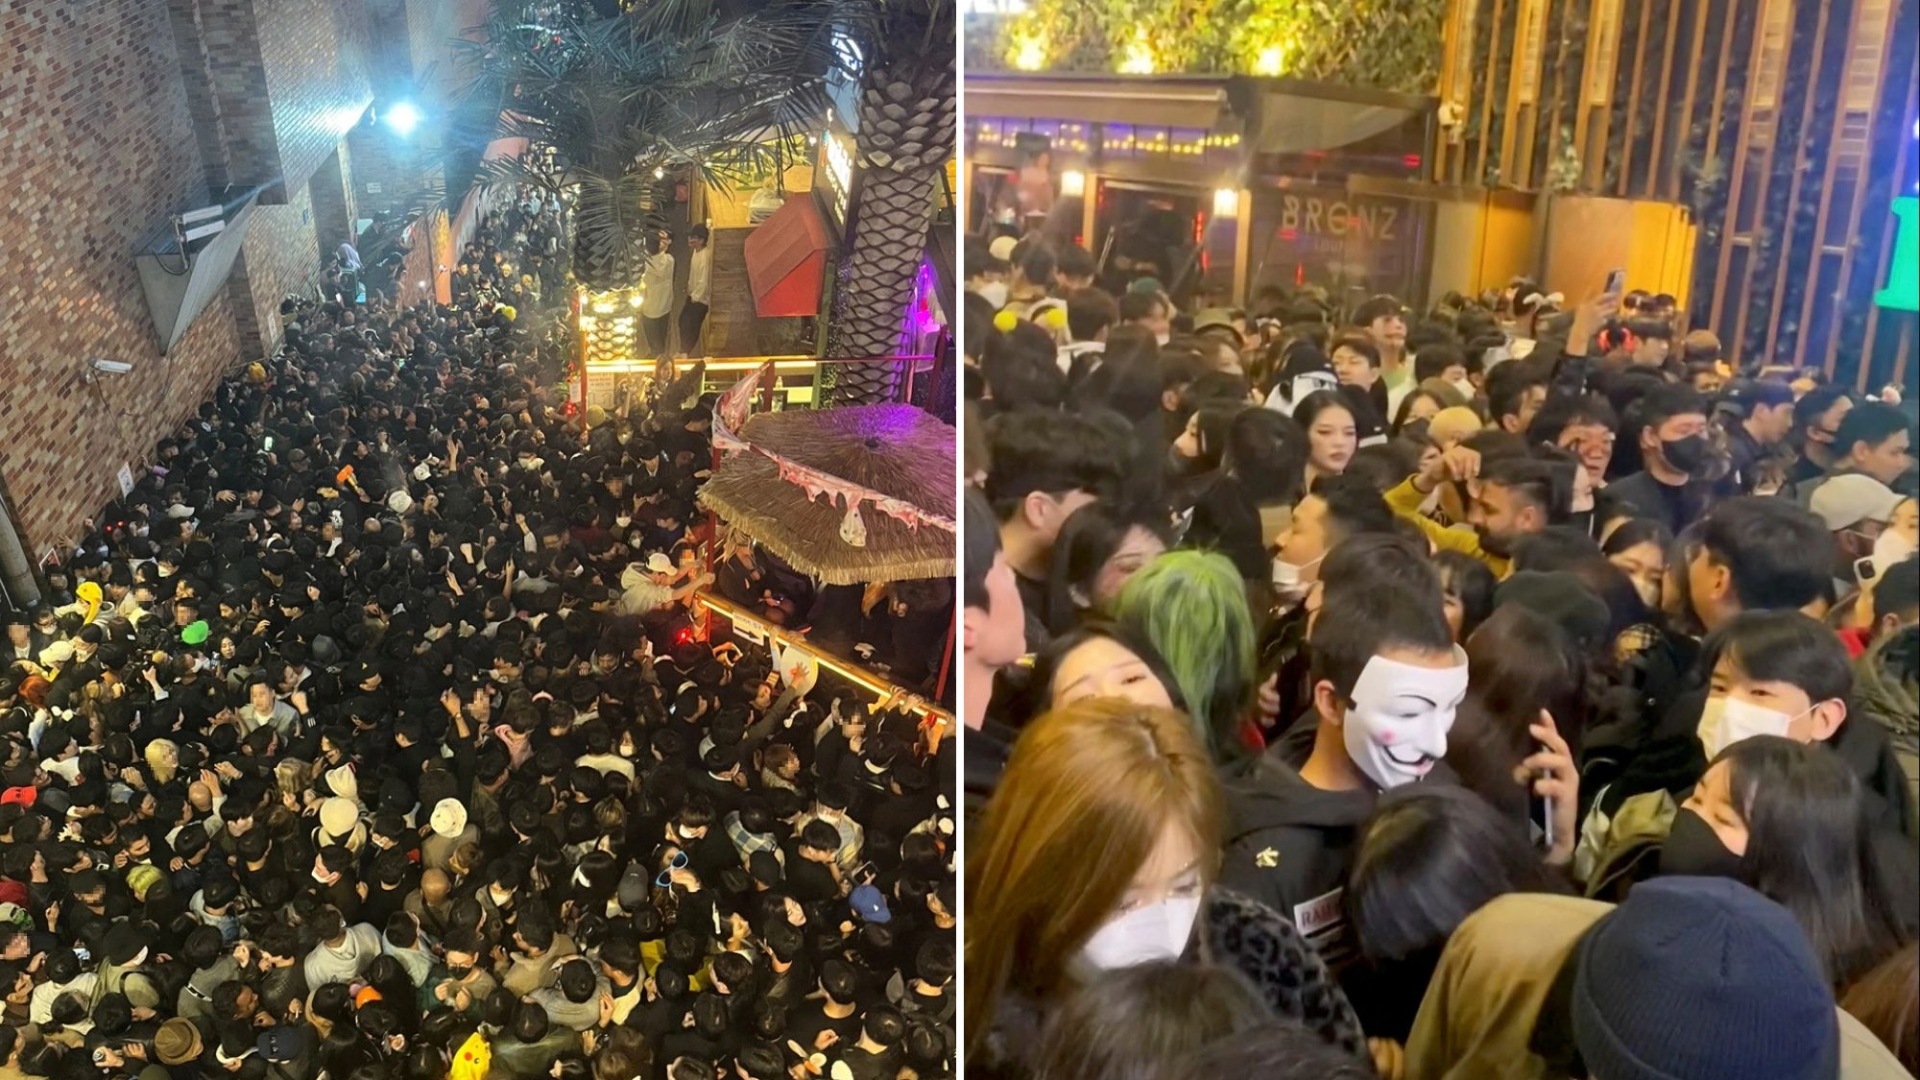 Seoul Halloween stampede left 153 dead, as 100,000 revelers jammed into narrow alleys 12 feet wide.